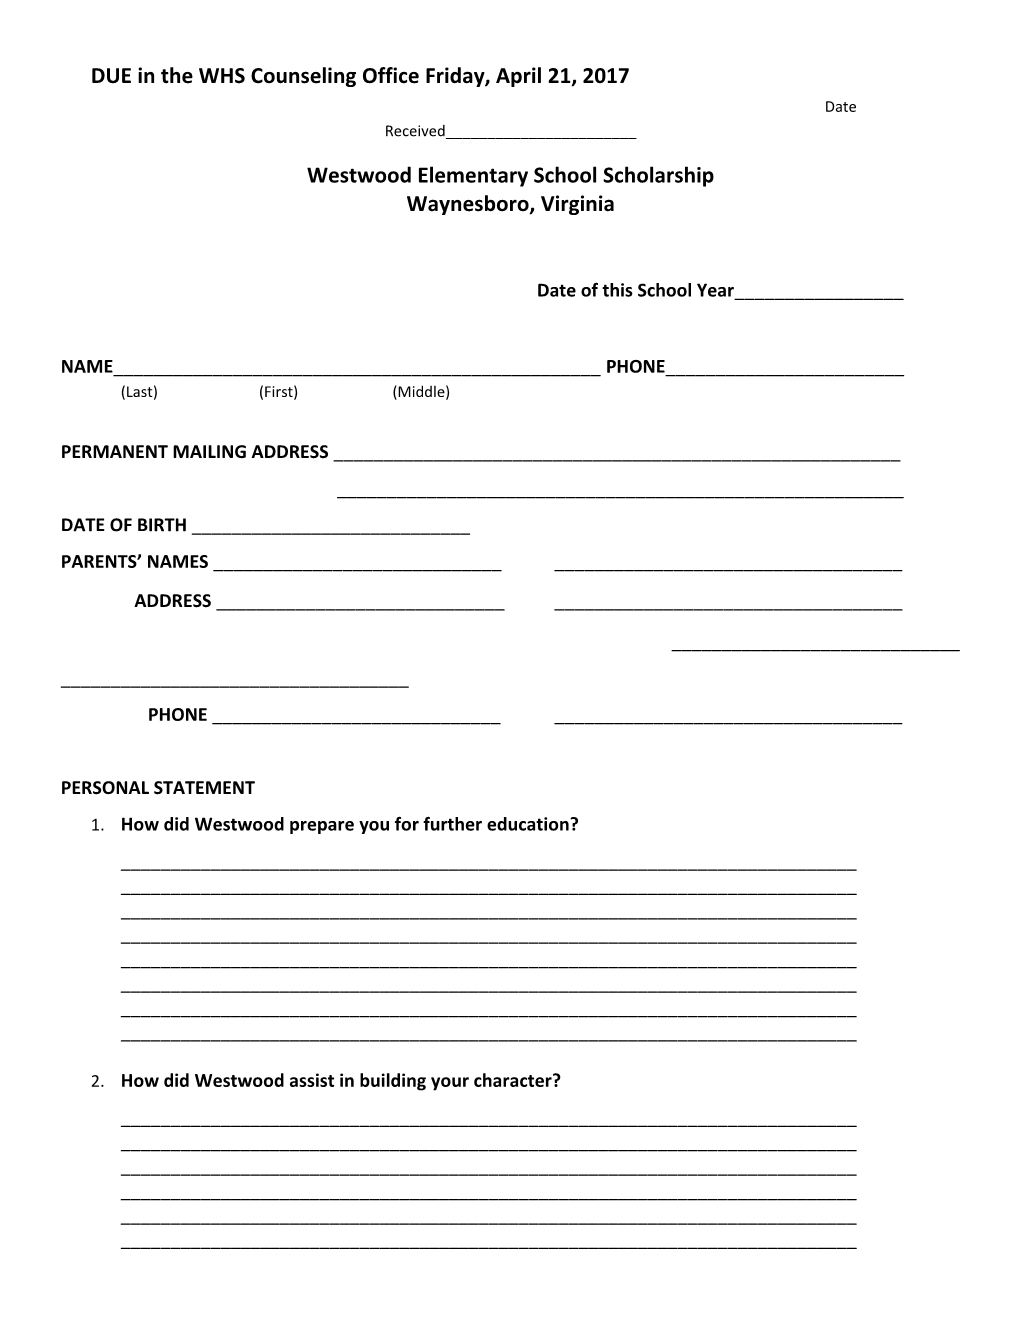 Westwood Elementary School Scholarship